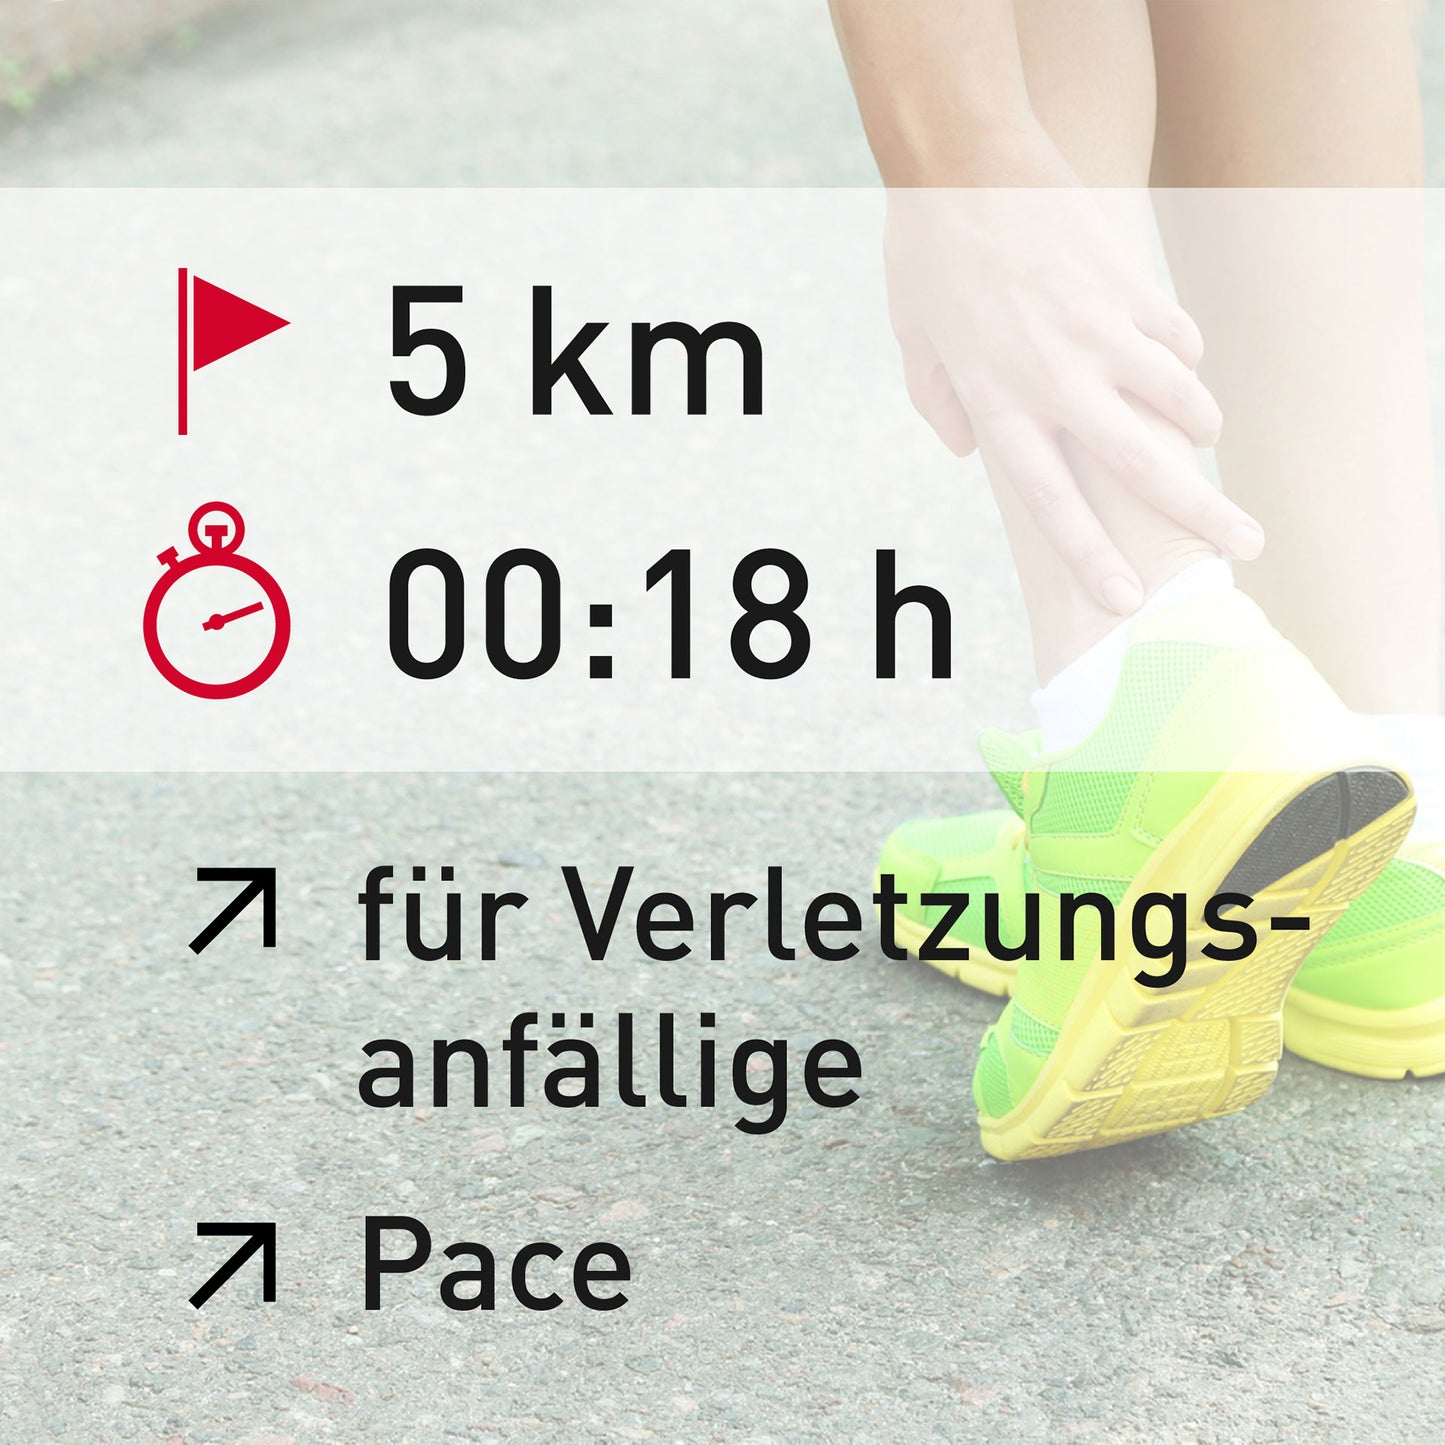 TRAININGSPLAN: 5 km | Verletzungsanfällige Läufer | Pace